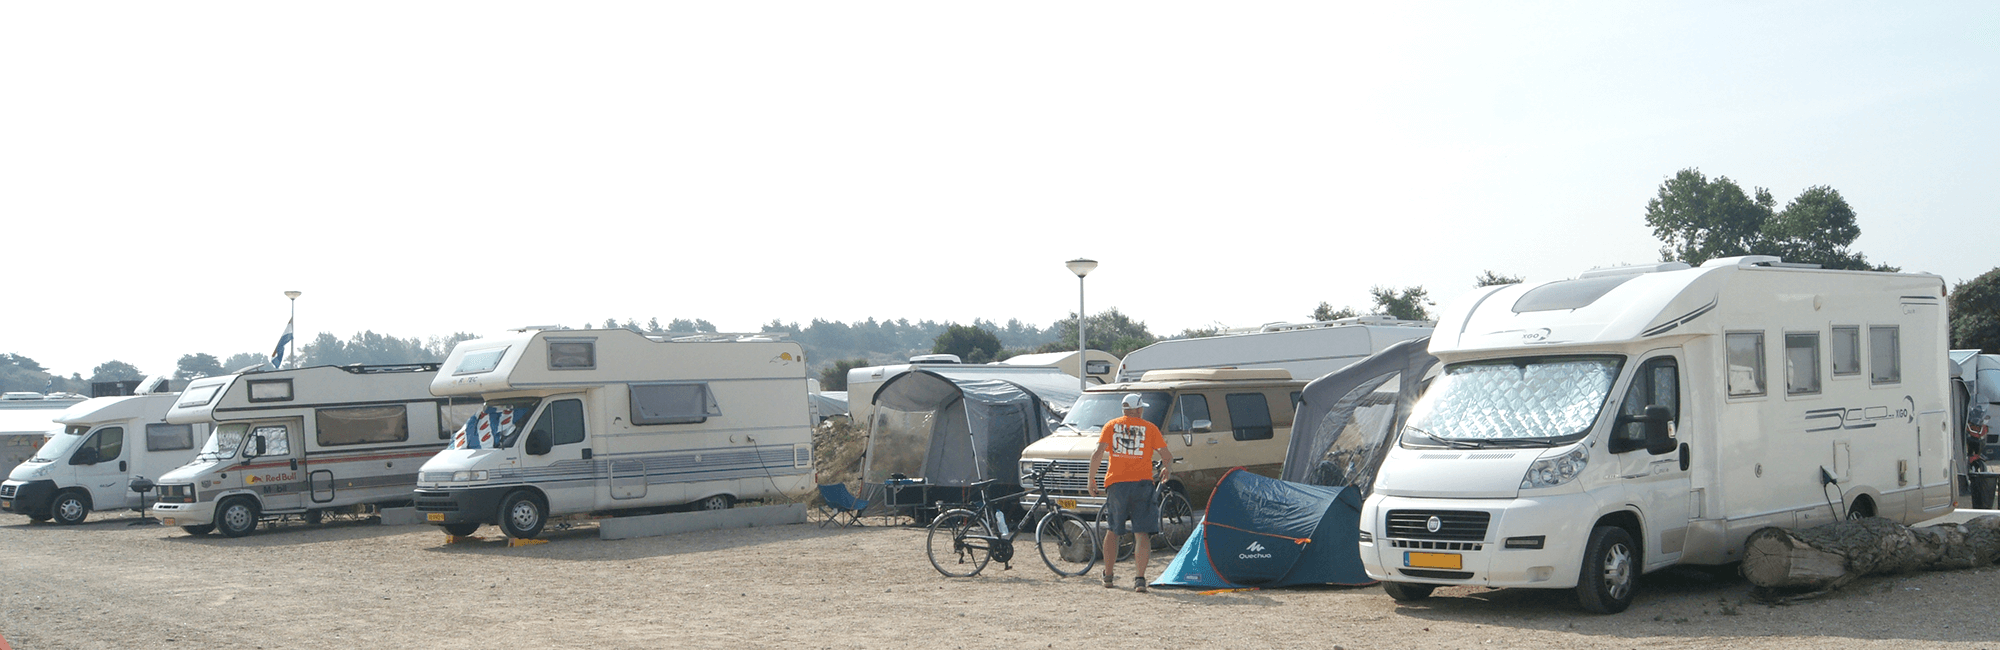 Camping Bloemendaal